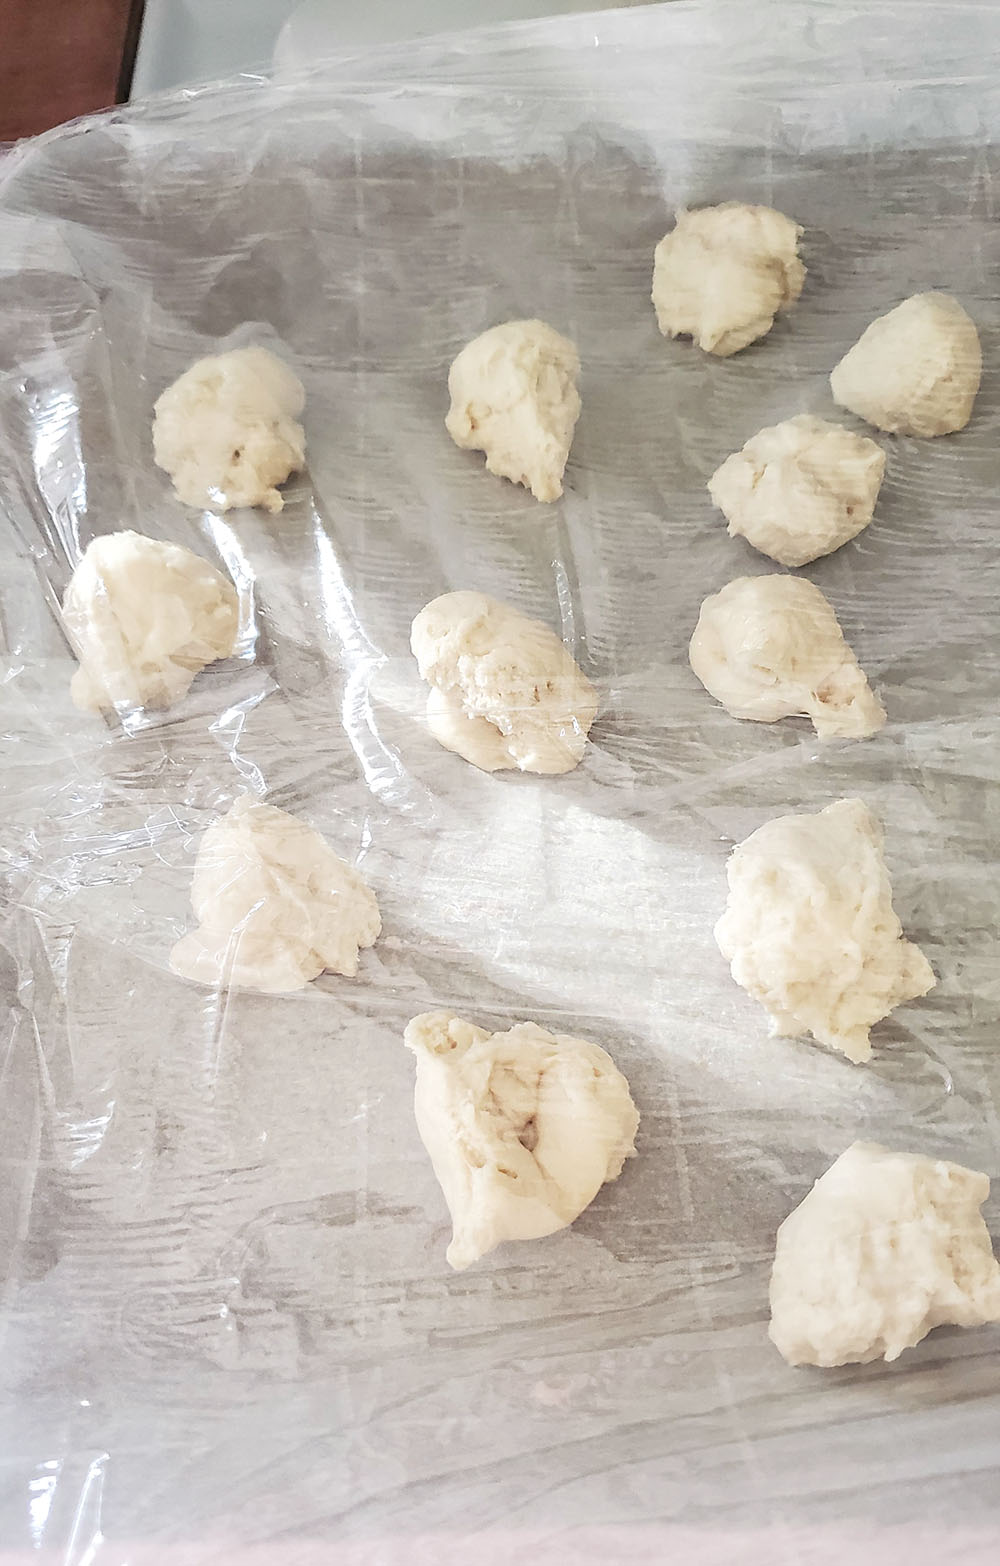 little balls of bread dough waiting for the air fryer.